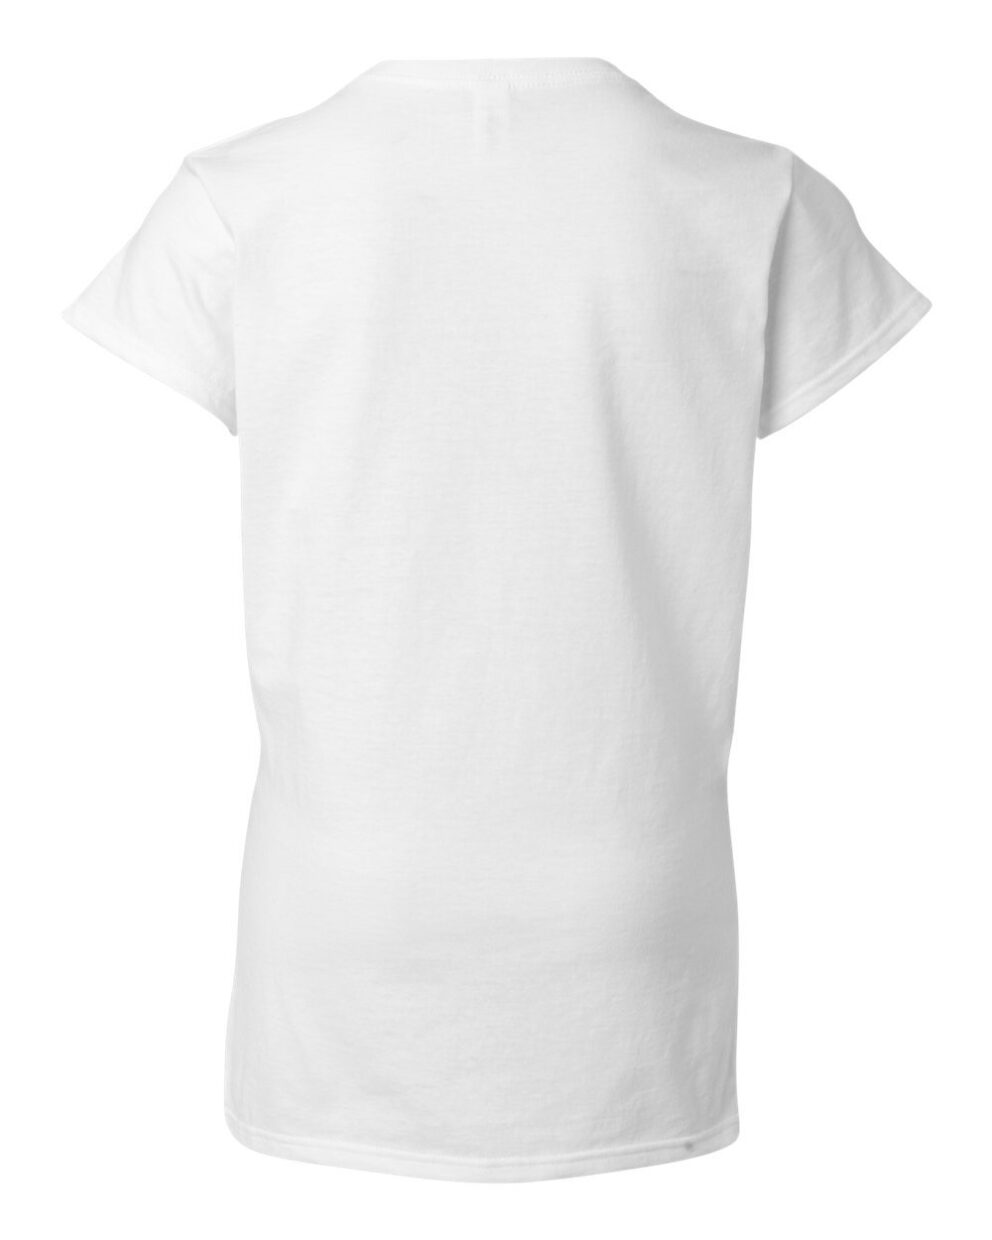 Ladies Softest Cotton V-neck T-shirt